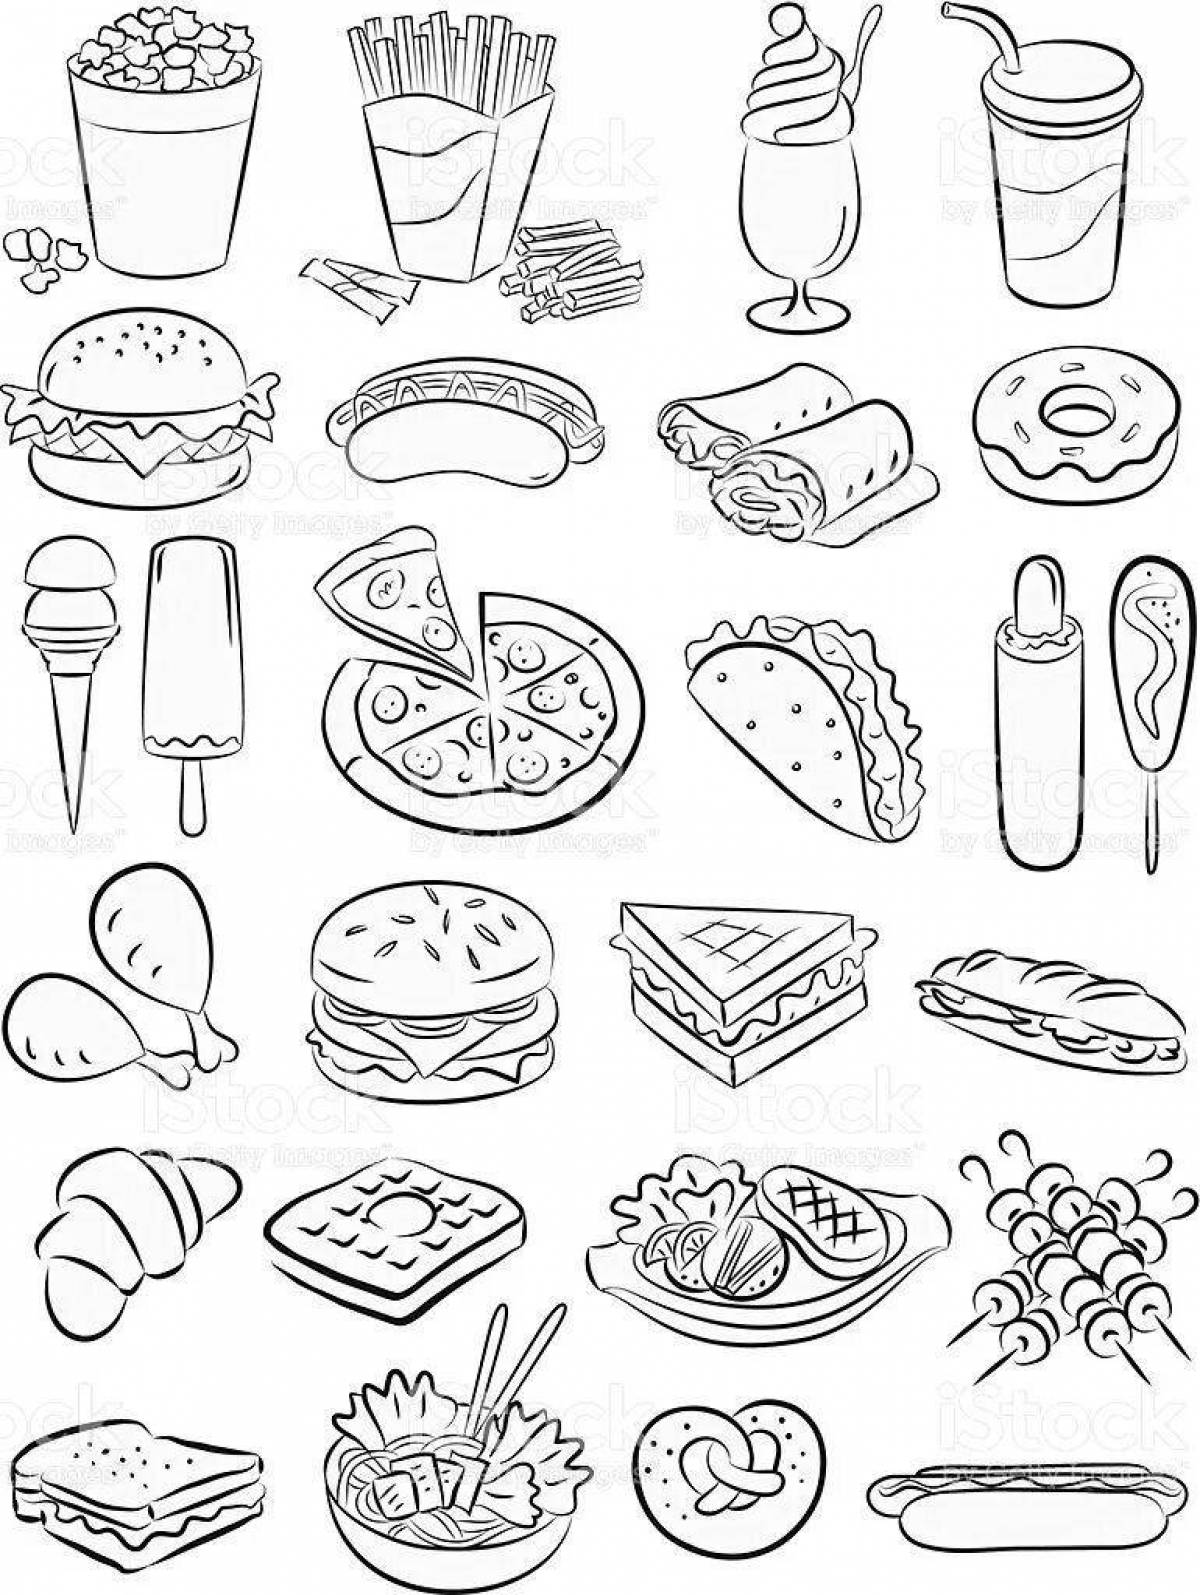 Attractive mcdonald's food coloring page